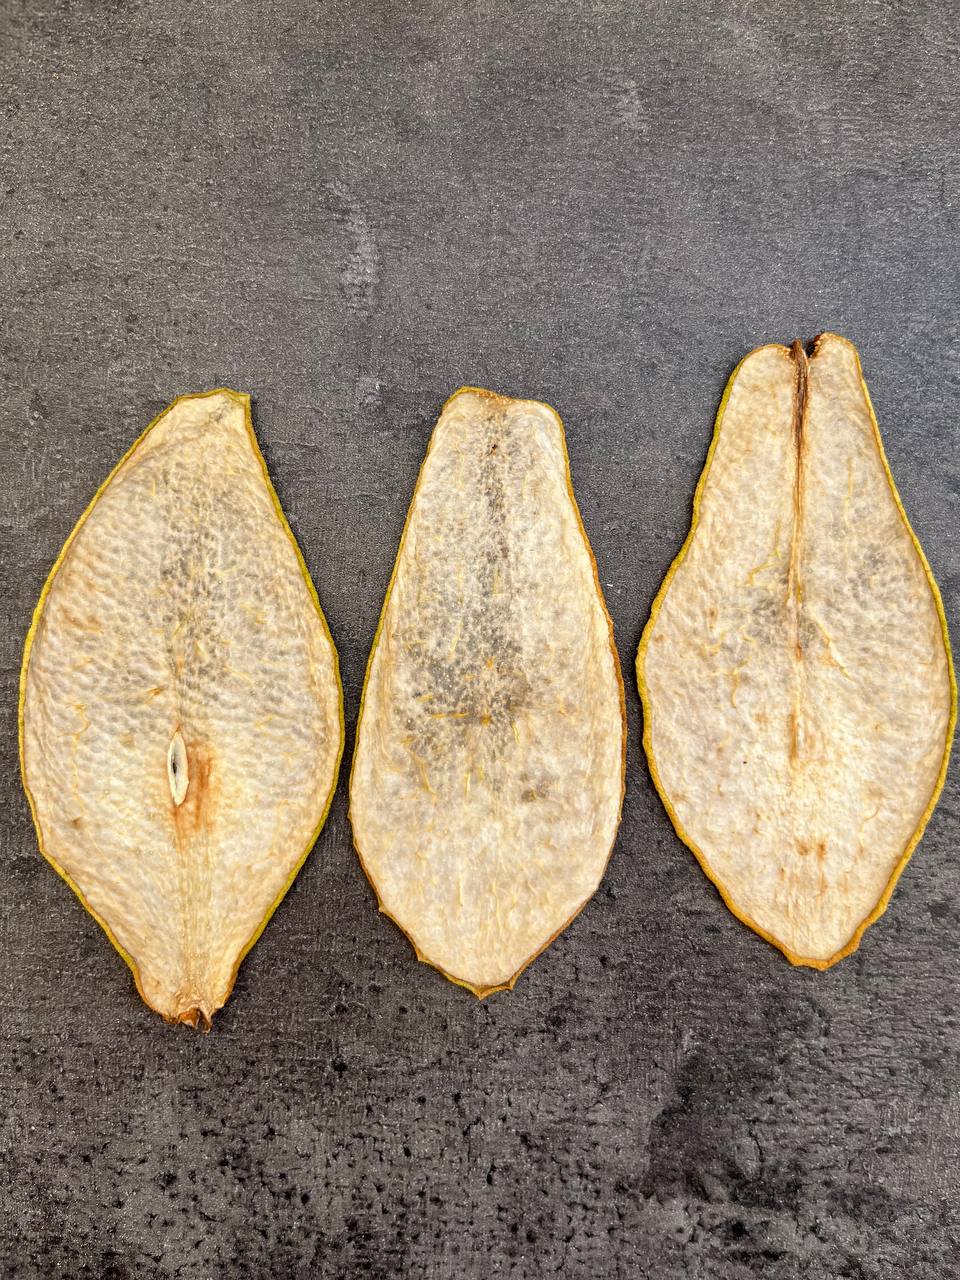 Dried Pear Slices, Organic, Edible, 100% Natural, No Sugar Added